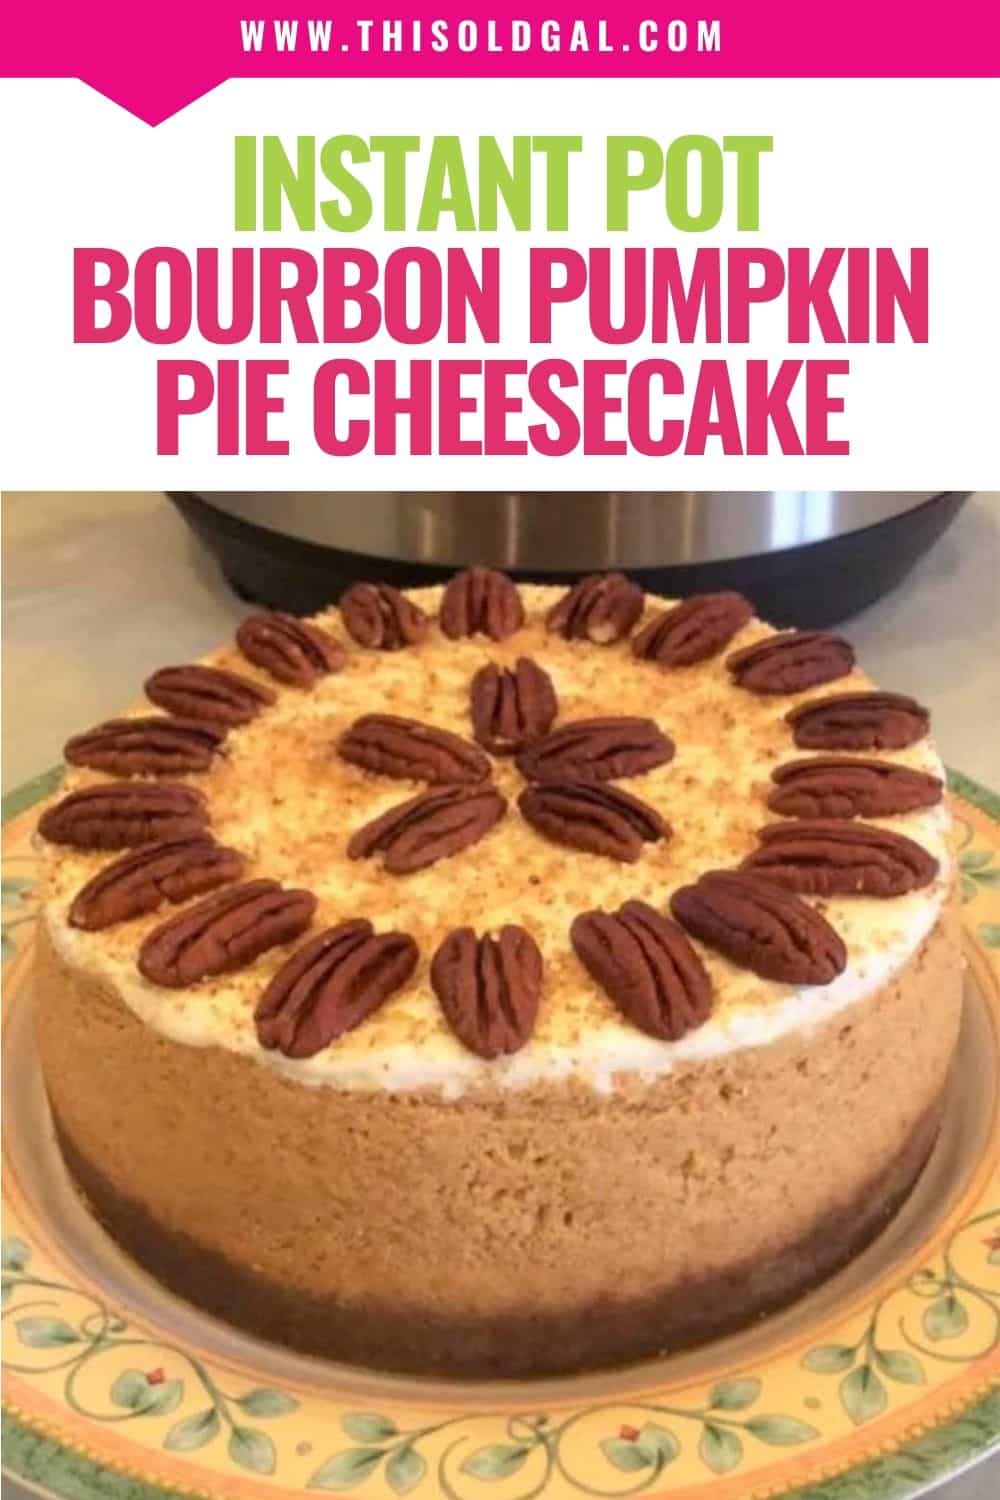 Instant Pot Bourbon Pumpkin Pie Cheesecake (Pake)